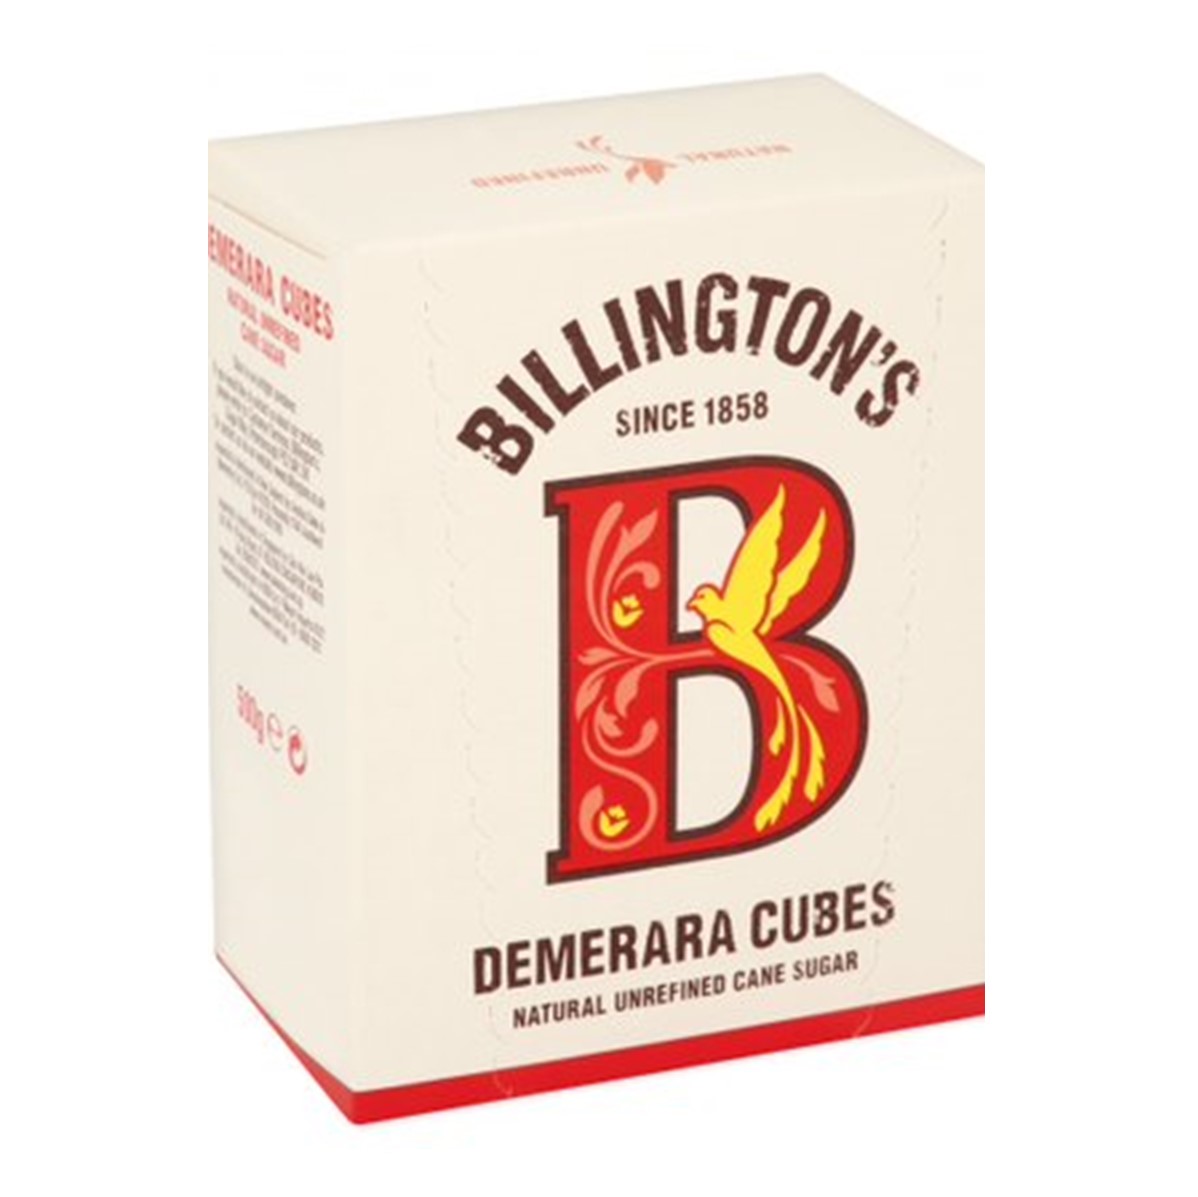 Billington's Demerara Sugar Cubes - 500g **